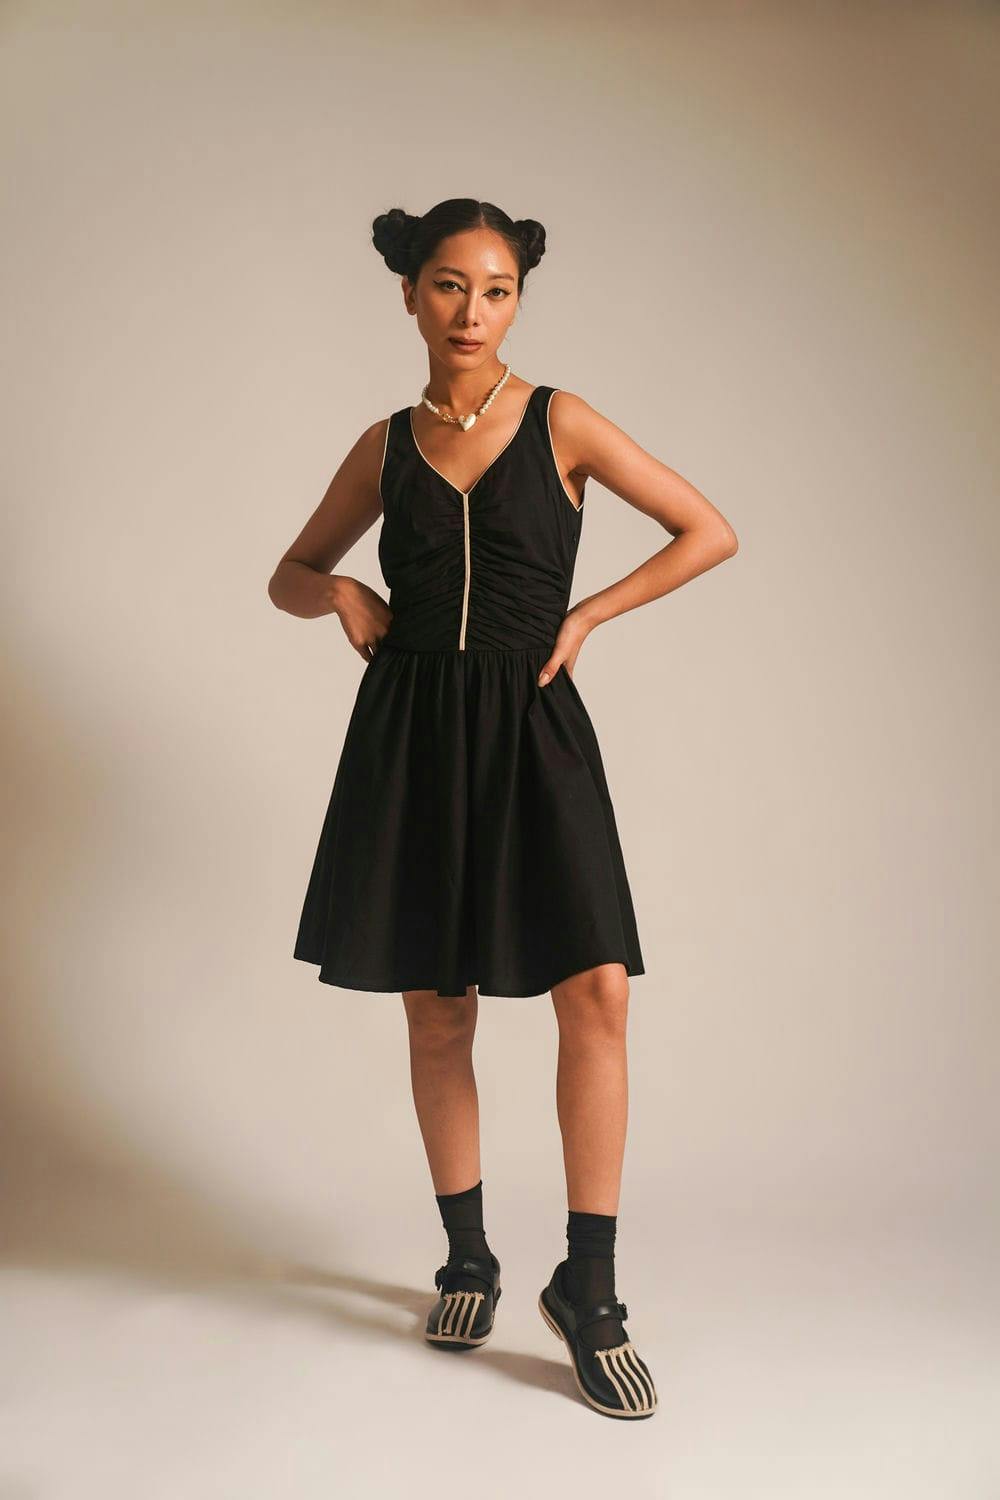 ATBW Ms. Empath - Short Dress, a product by ATBW